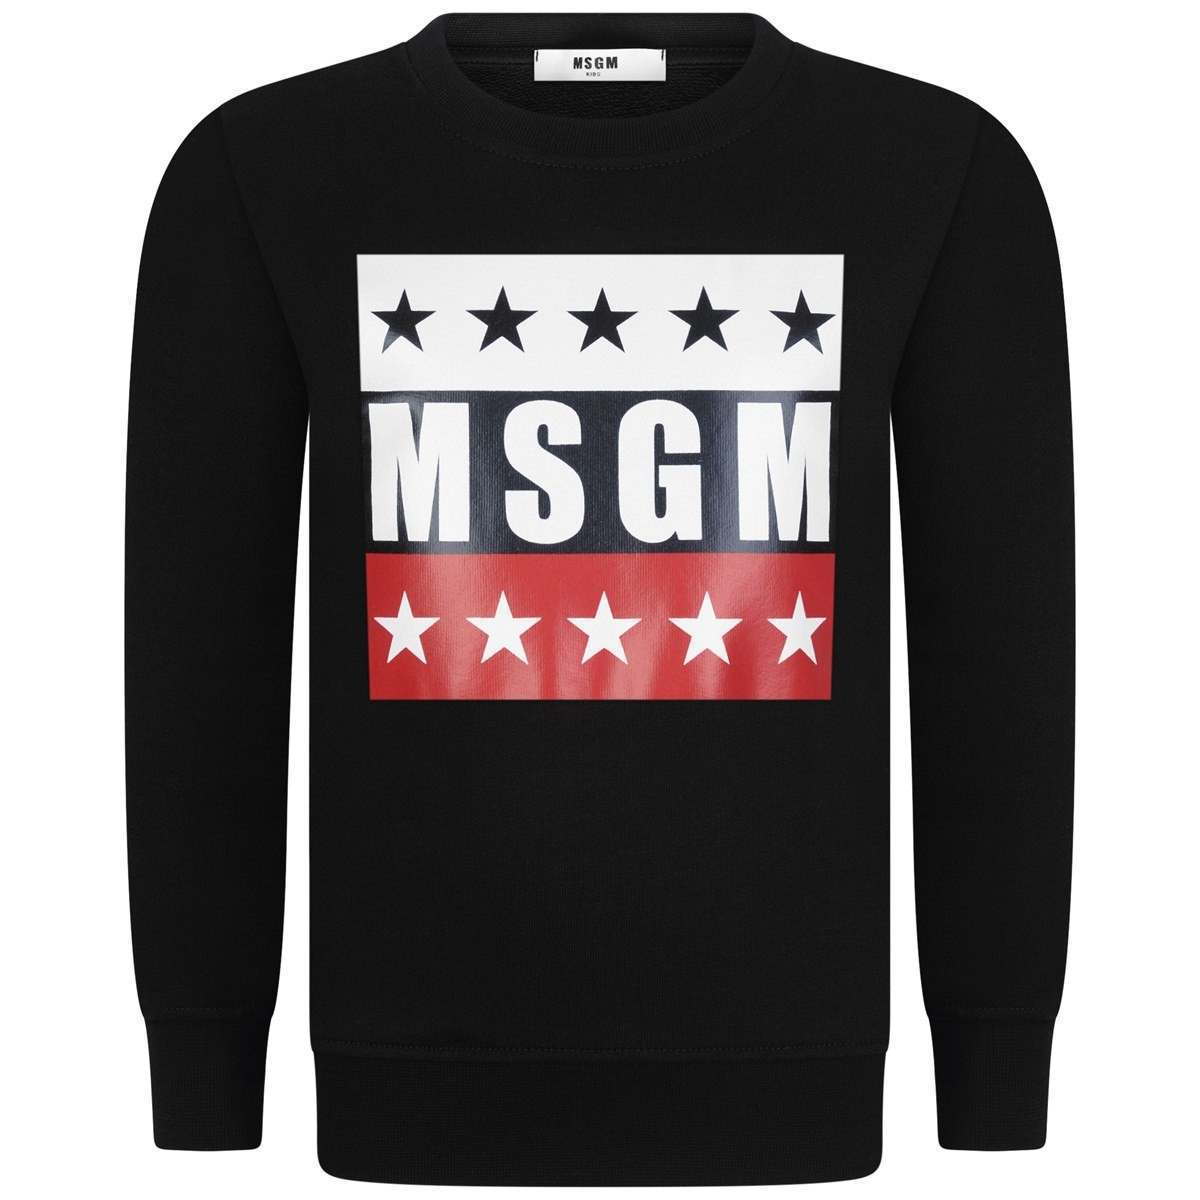 Boy Looking at Star Logo - MSGM Boys Black Star Logo Sweater